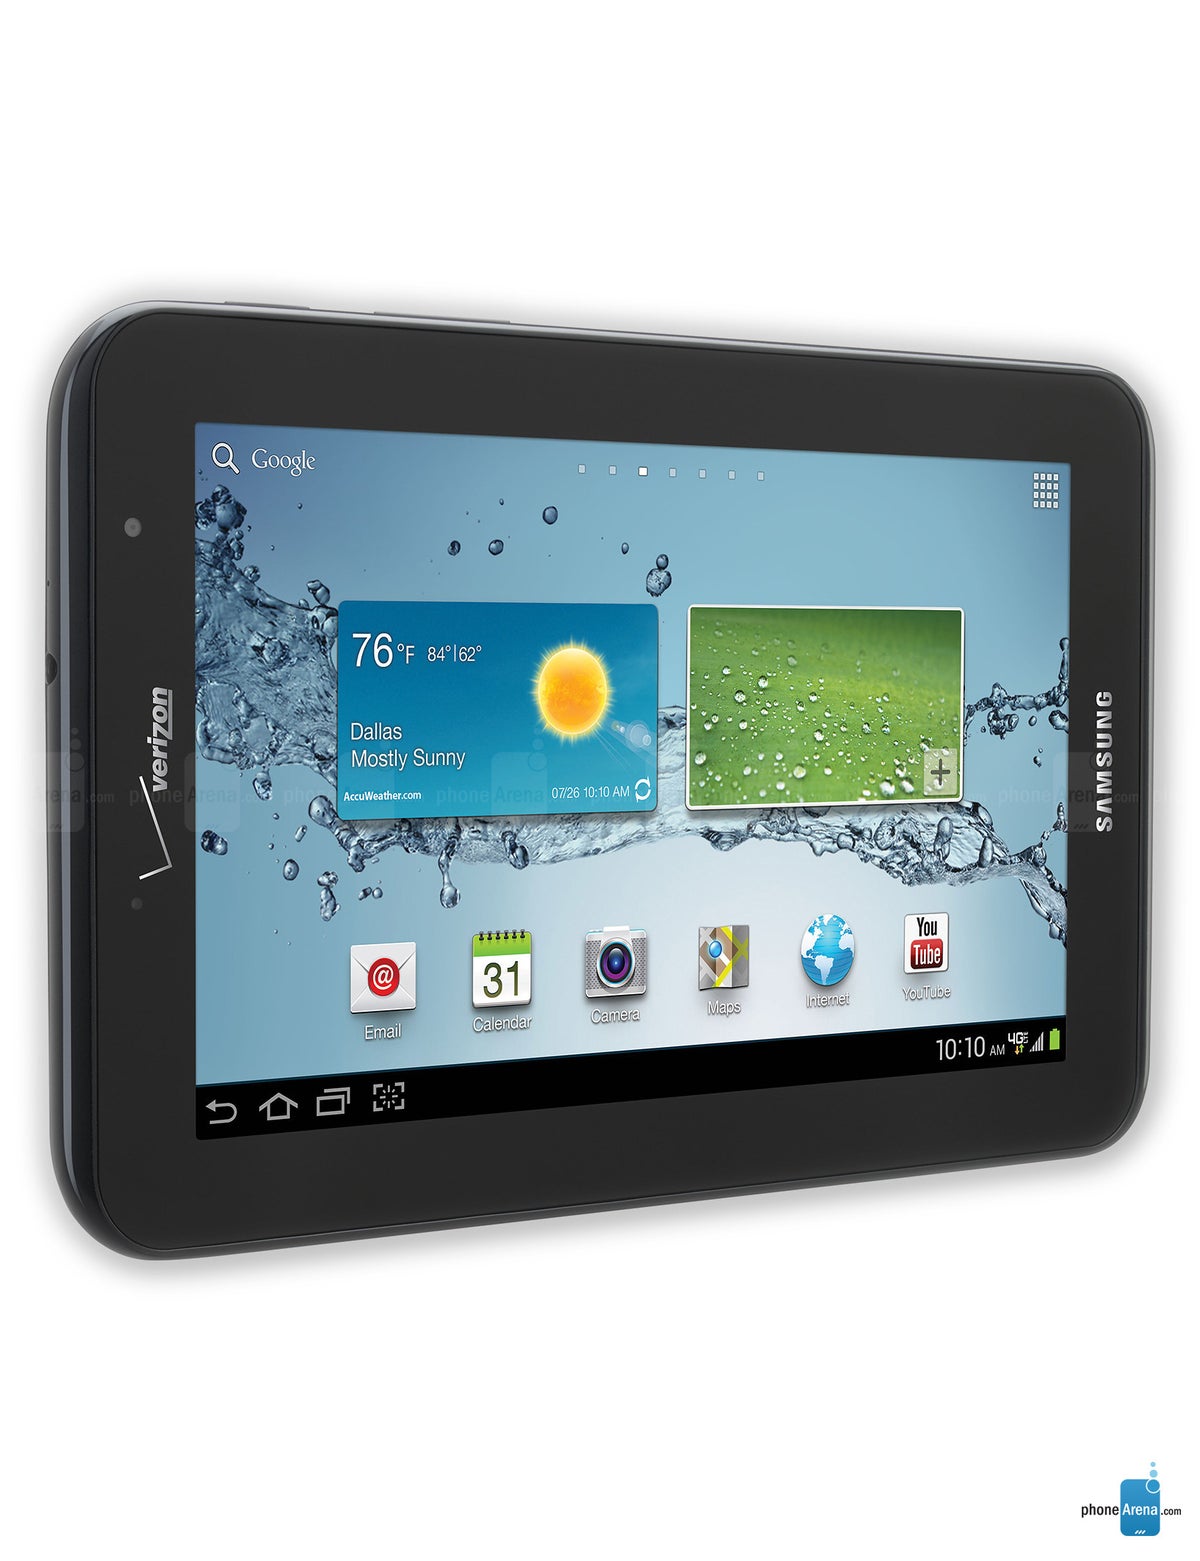 Samsung Galaxy Tab 2 7 0 Lte Specs Phonearena